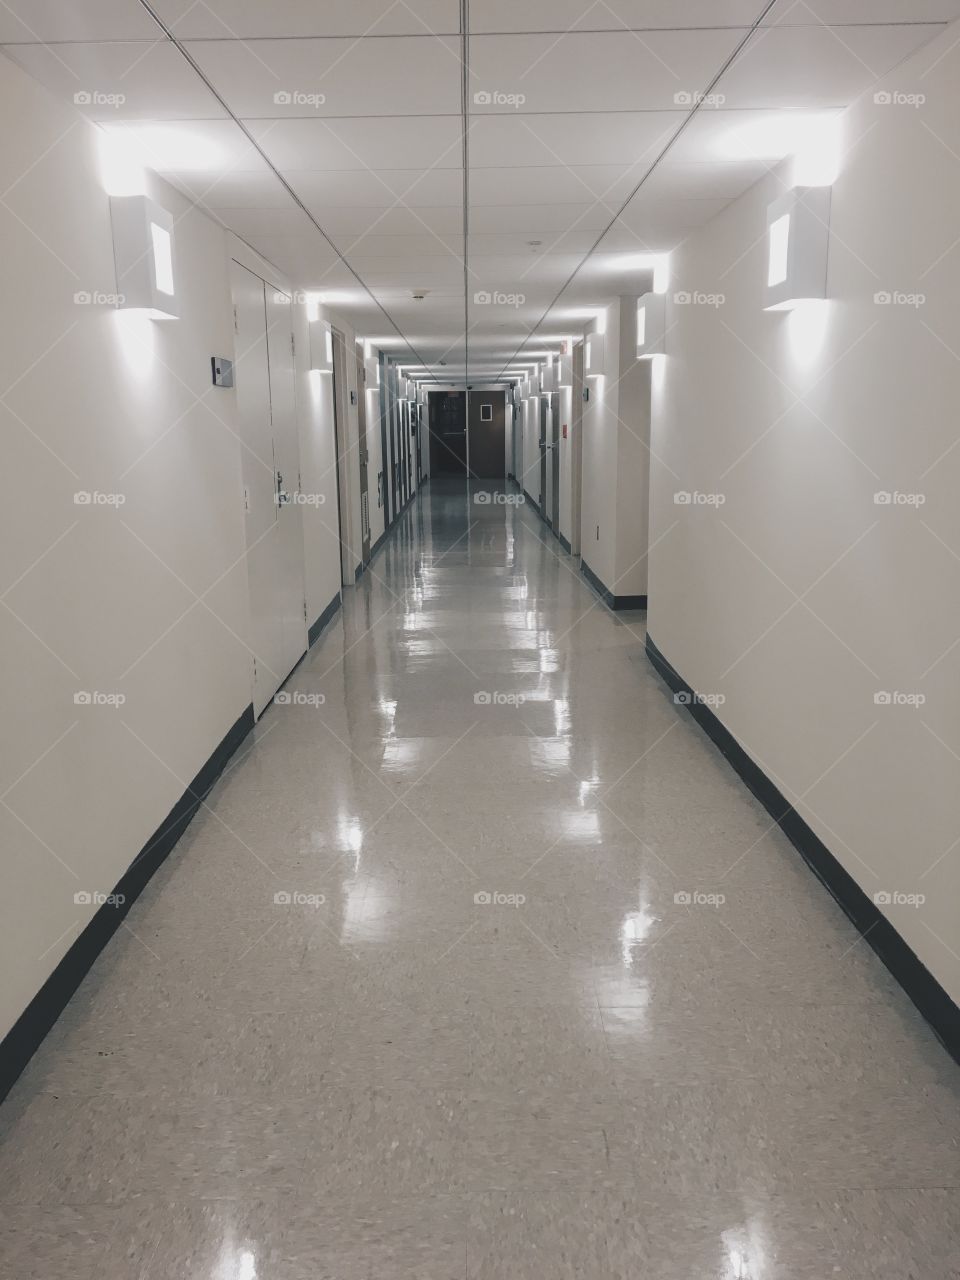 Hallway, Indoors, Subway System, Light, No Person